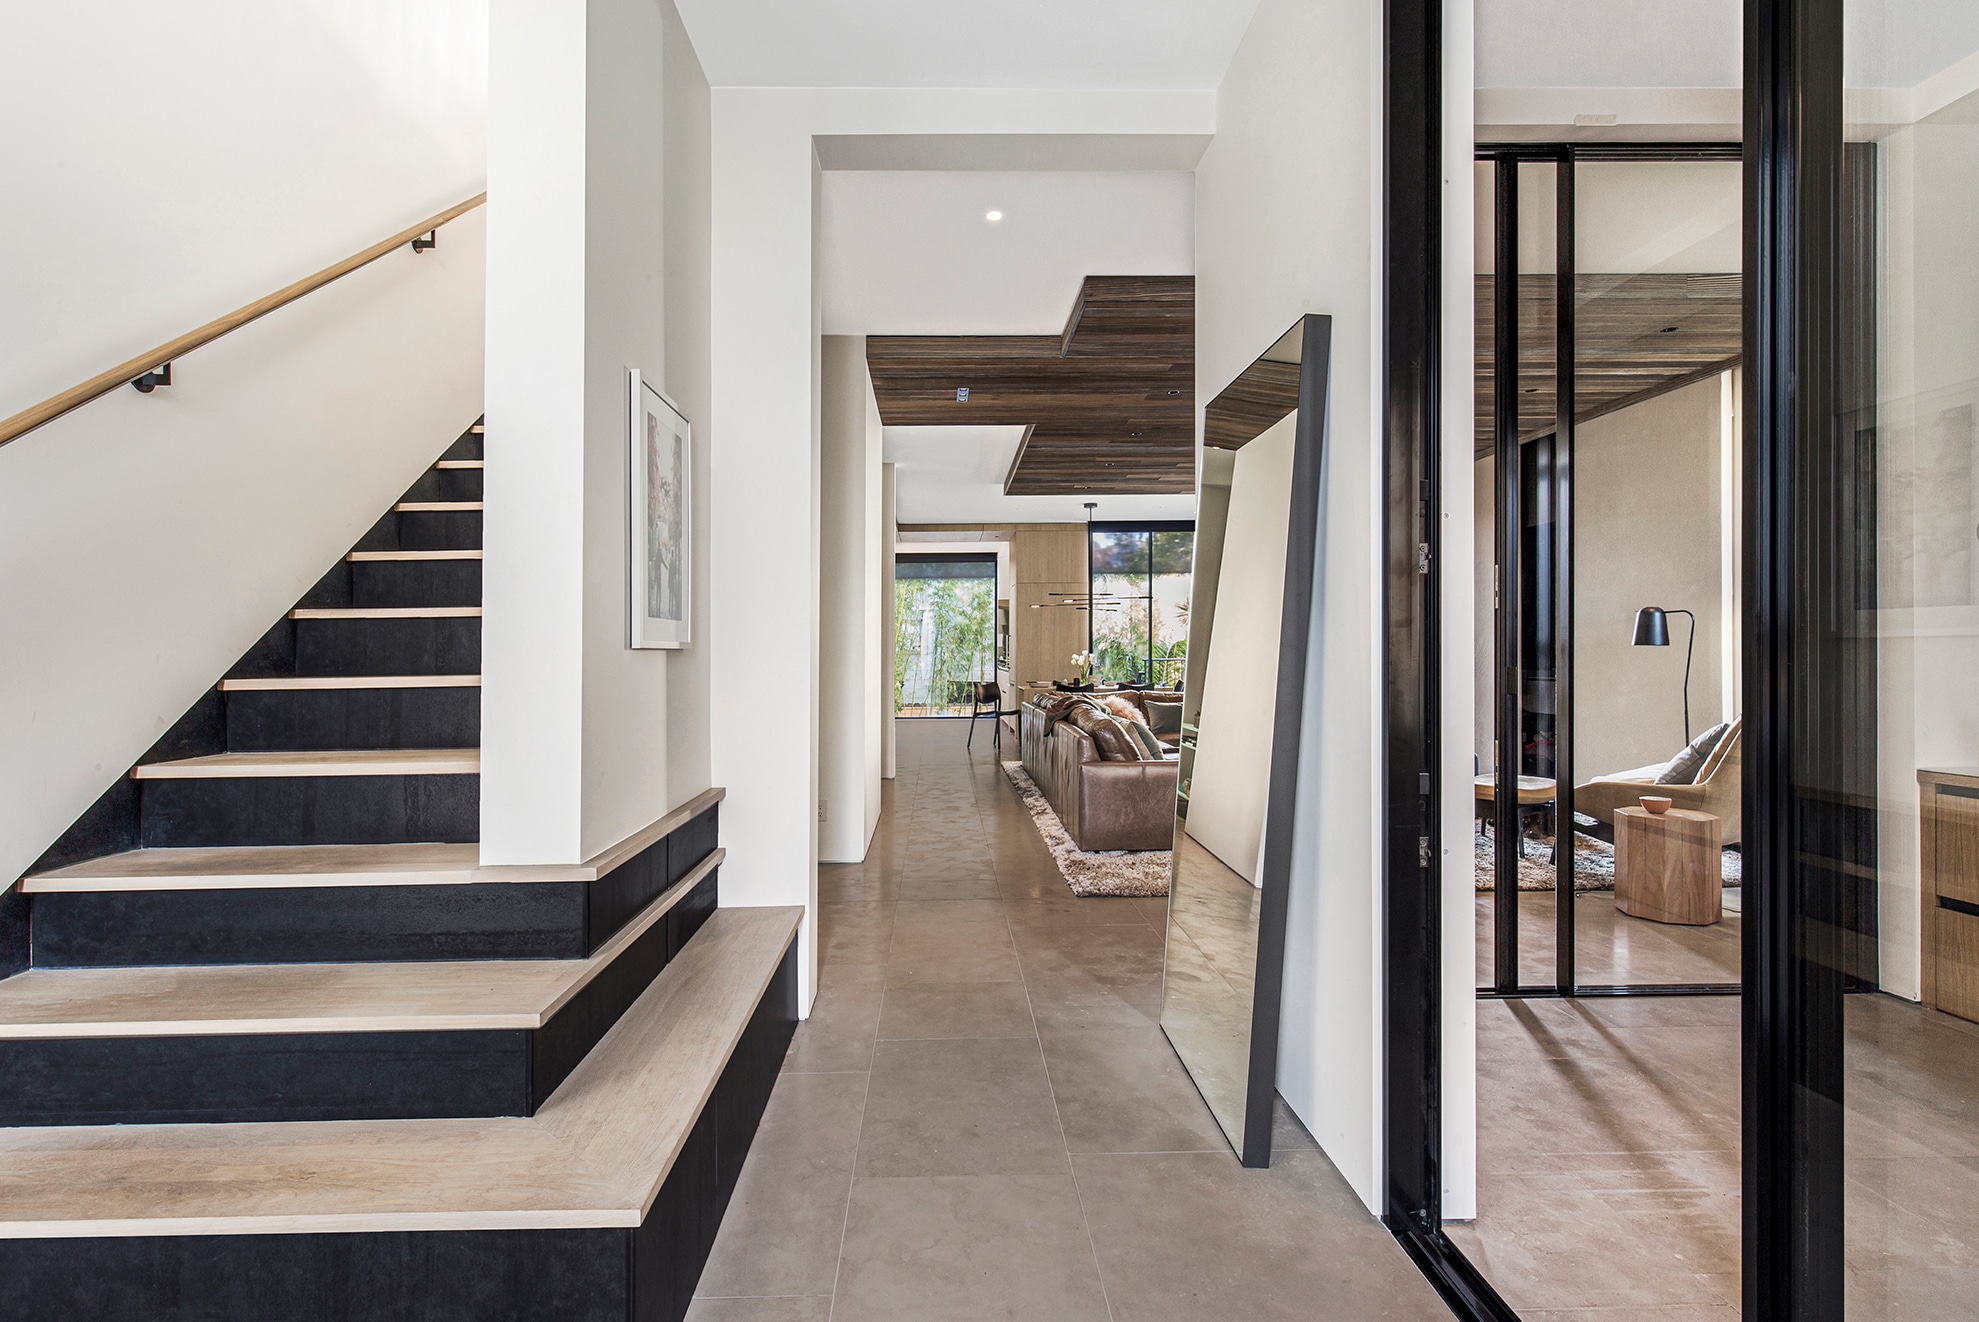 portfolio, castro district residential remodel, interior hallway